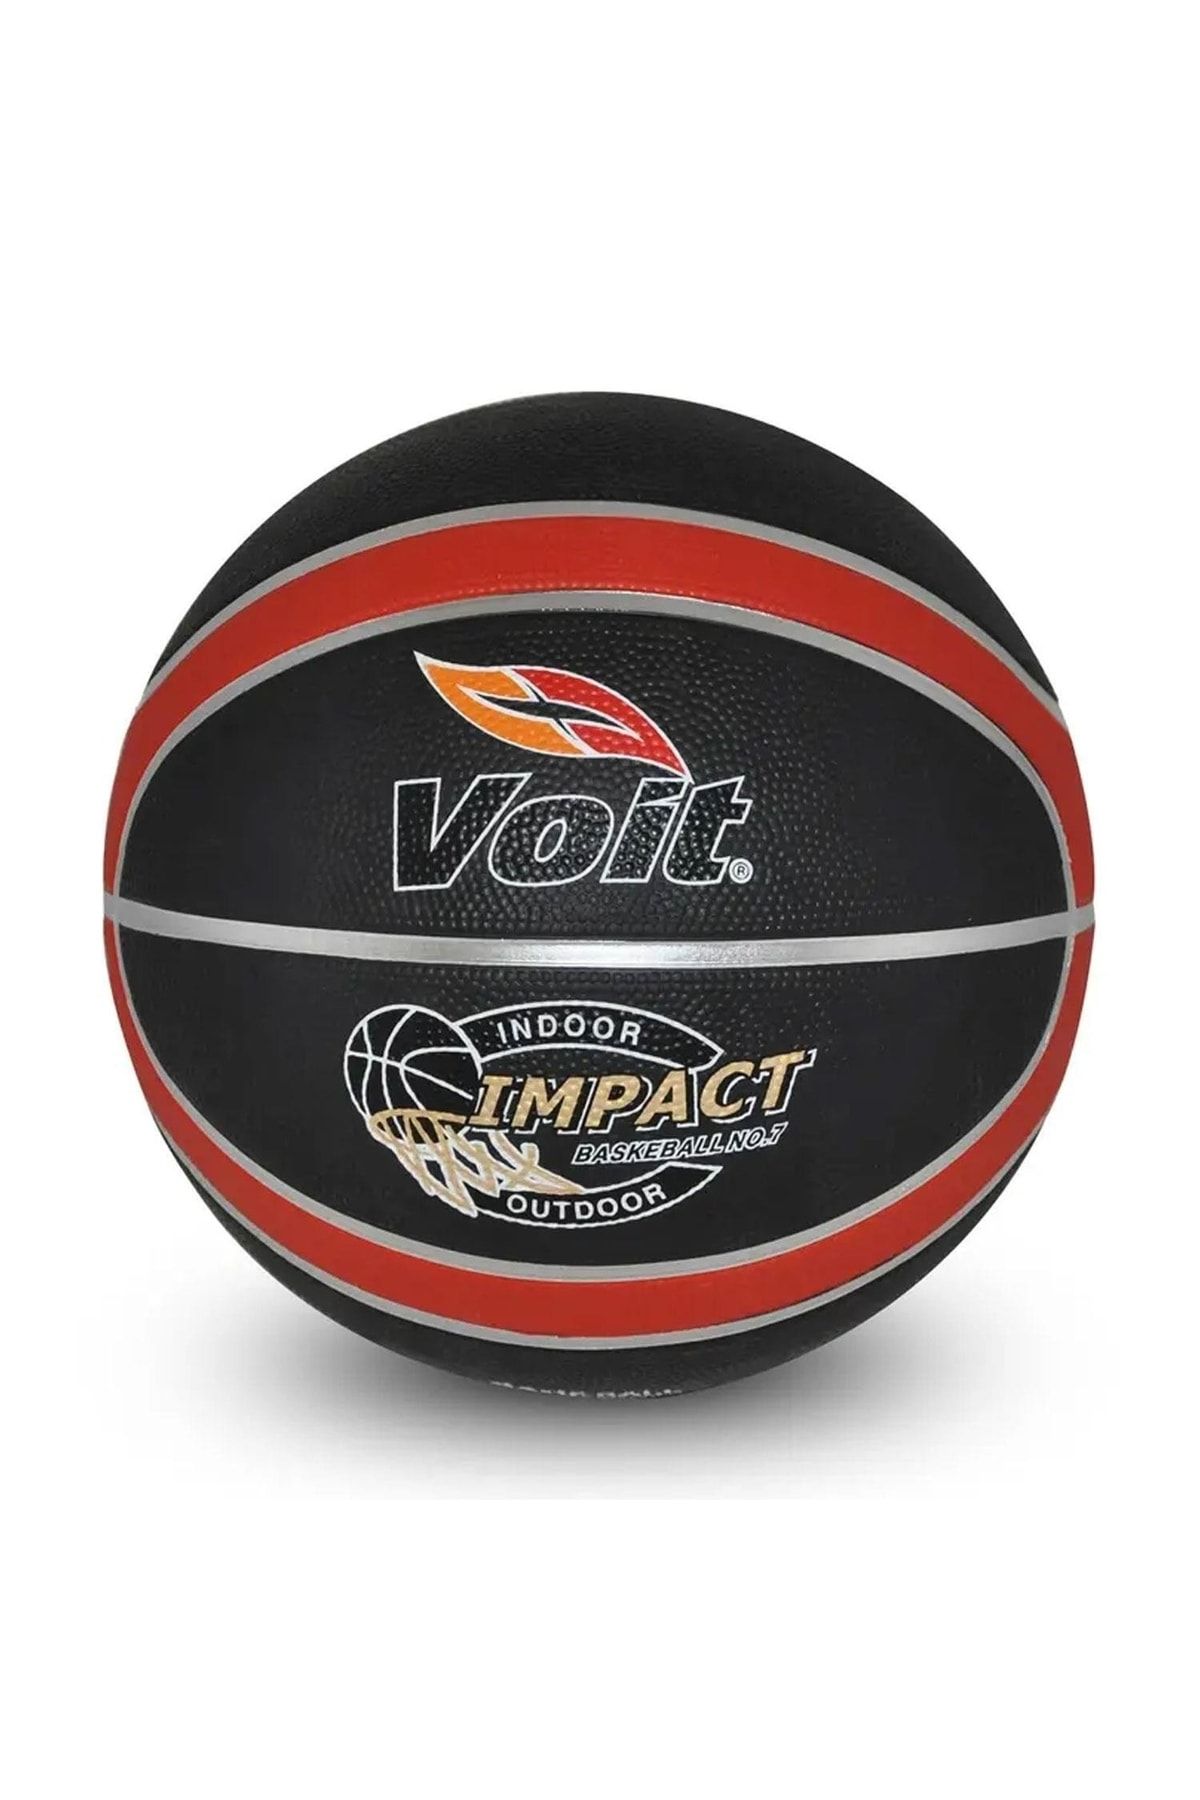 Voit Voit Impact Basketbol Topu Kırmızı Siyah 7 Numara